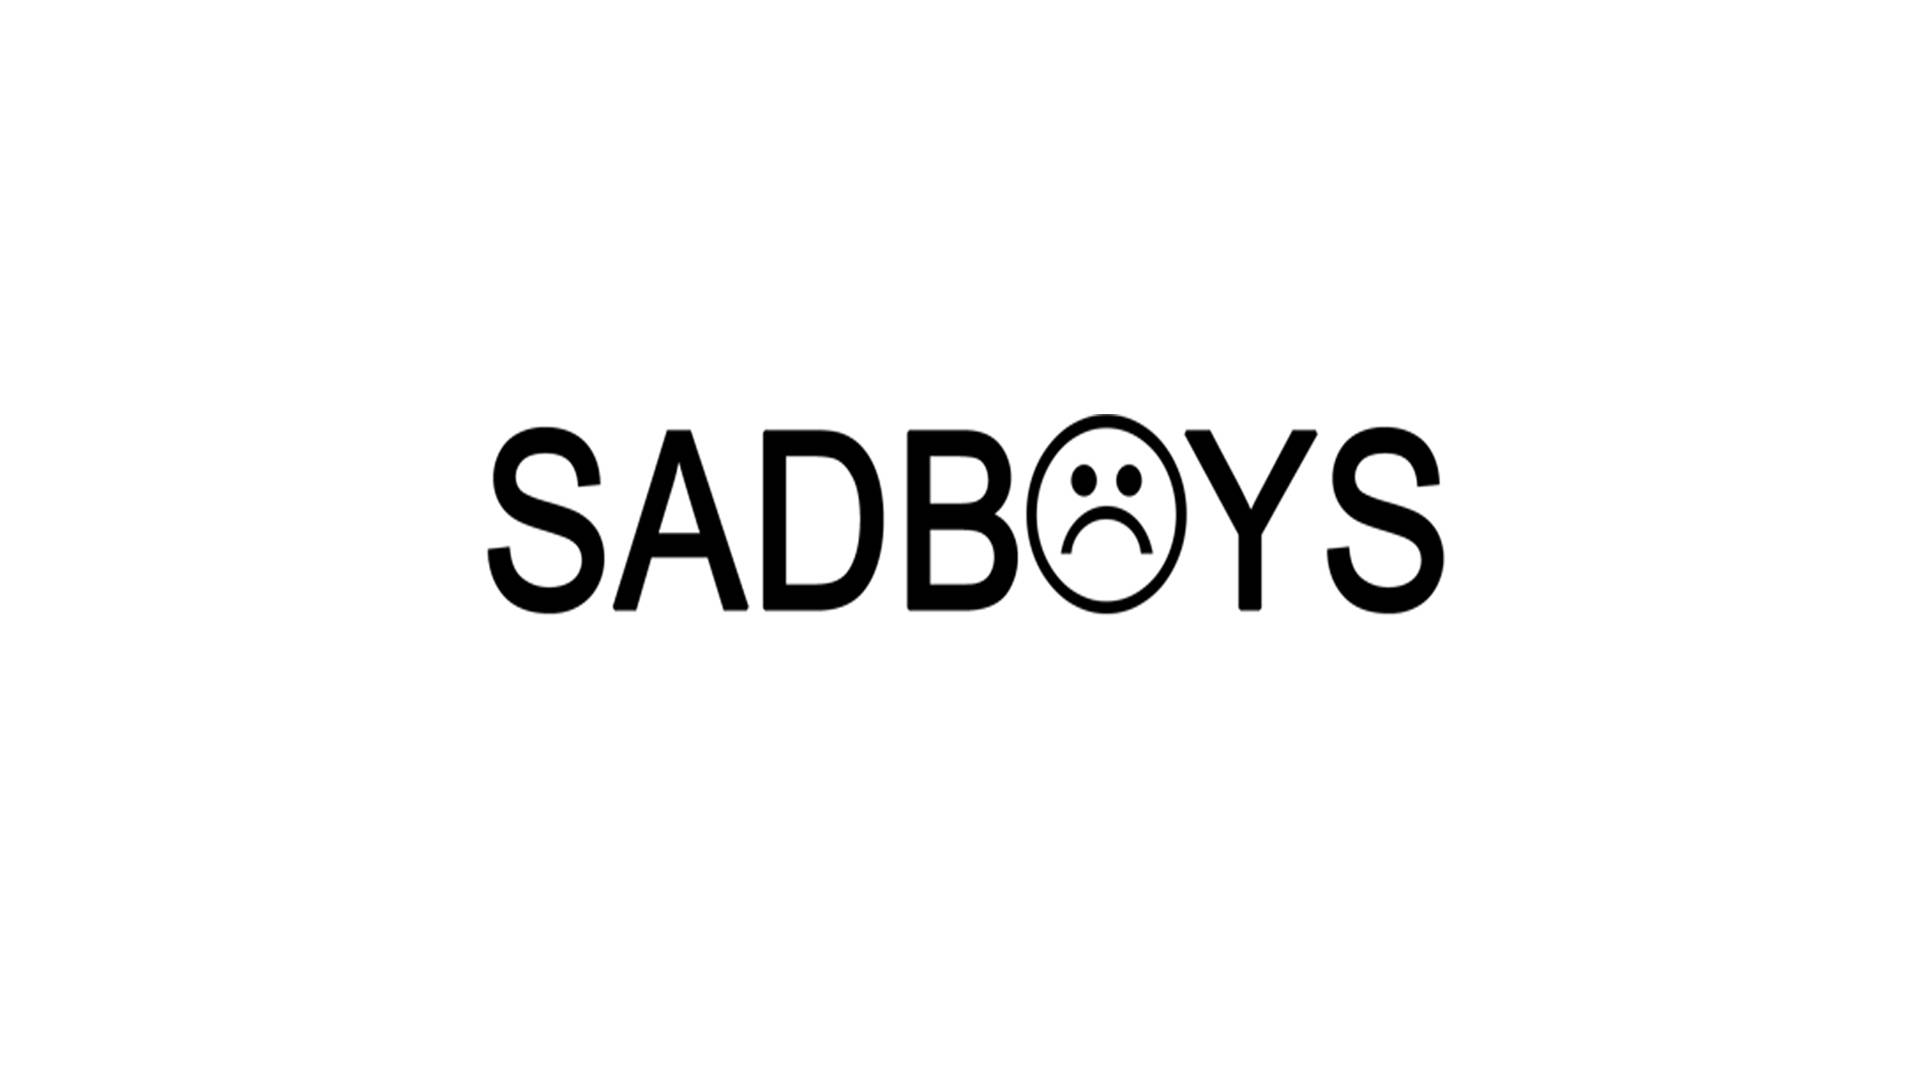 Black Sad Boys Text Wallpaper